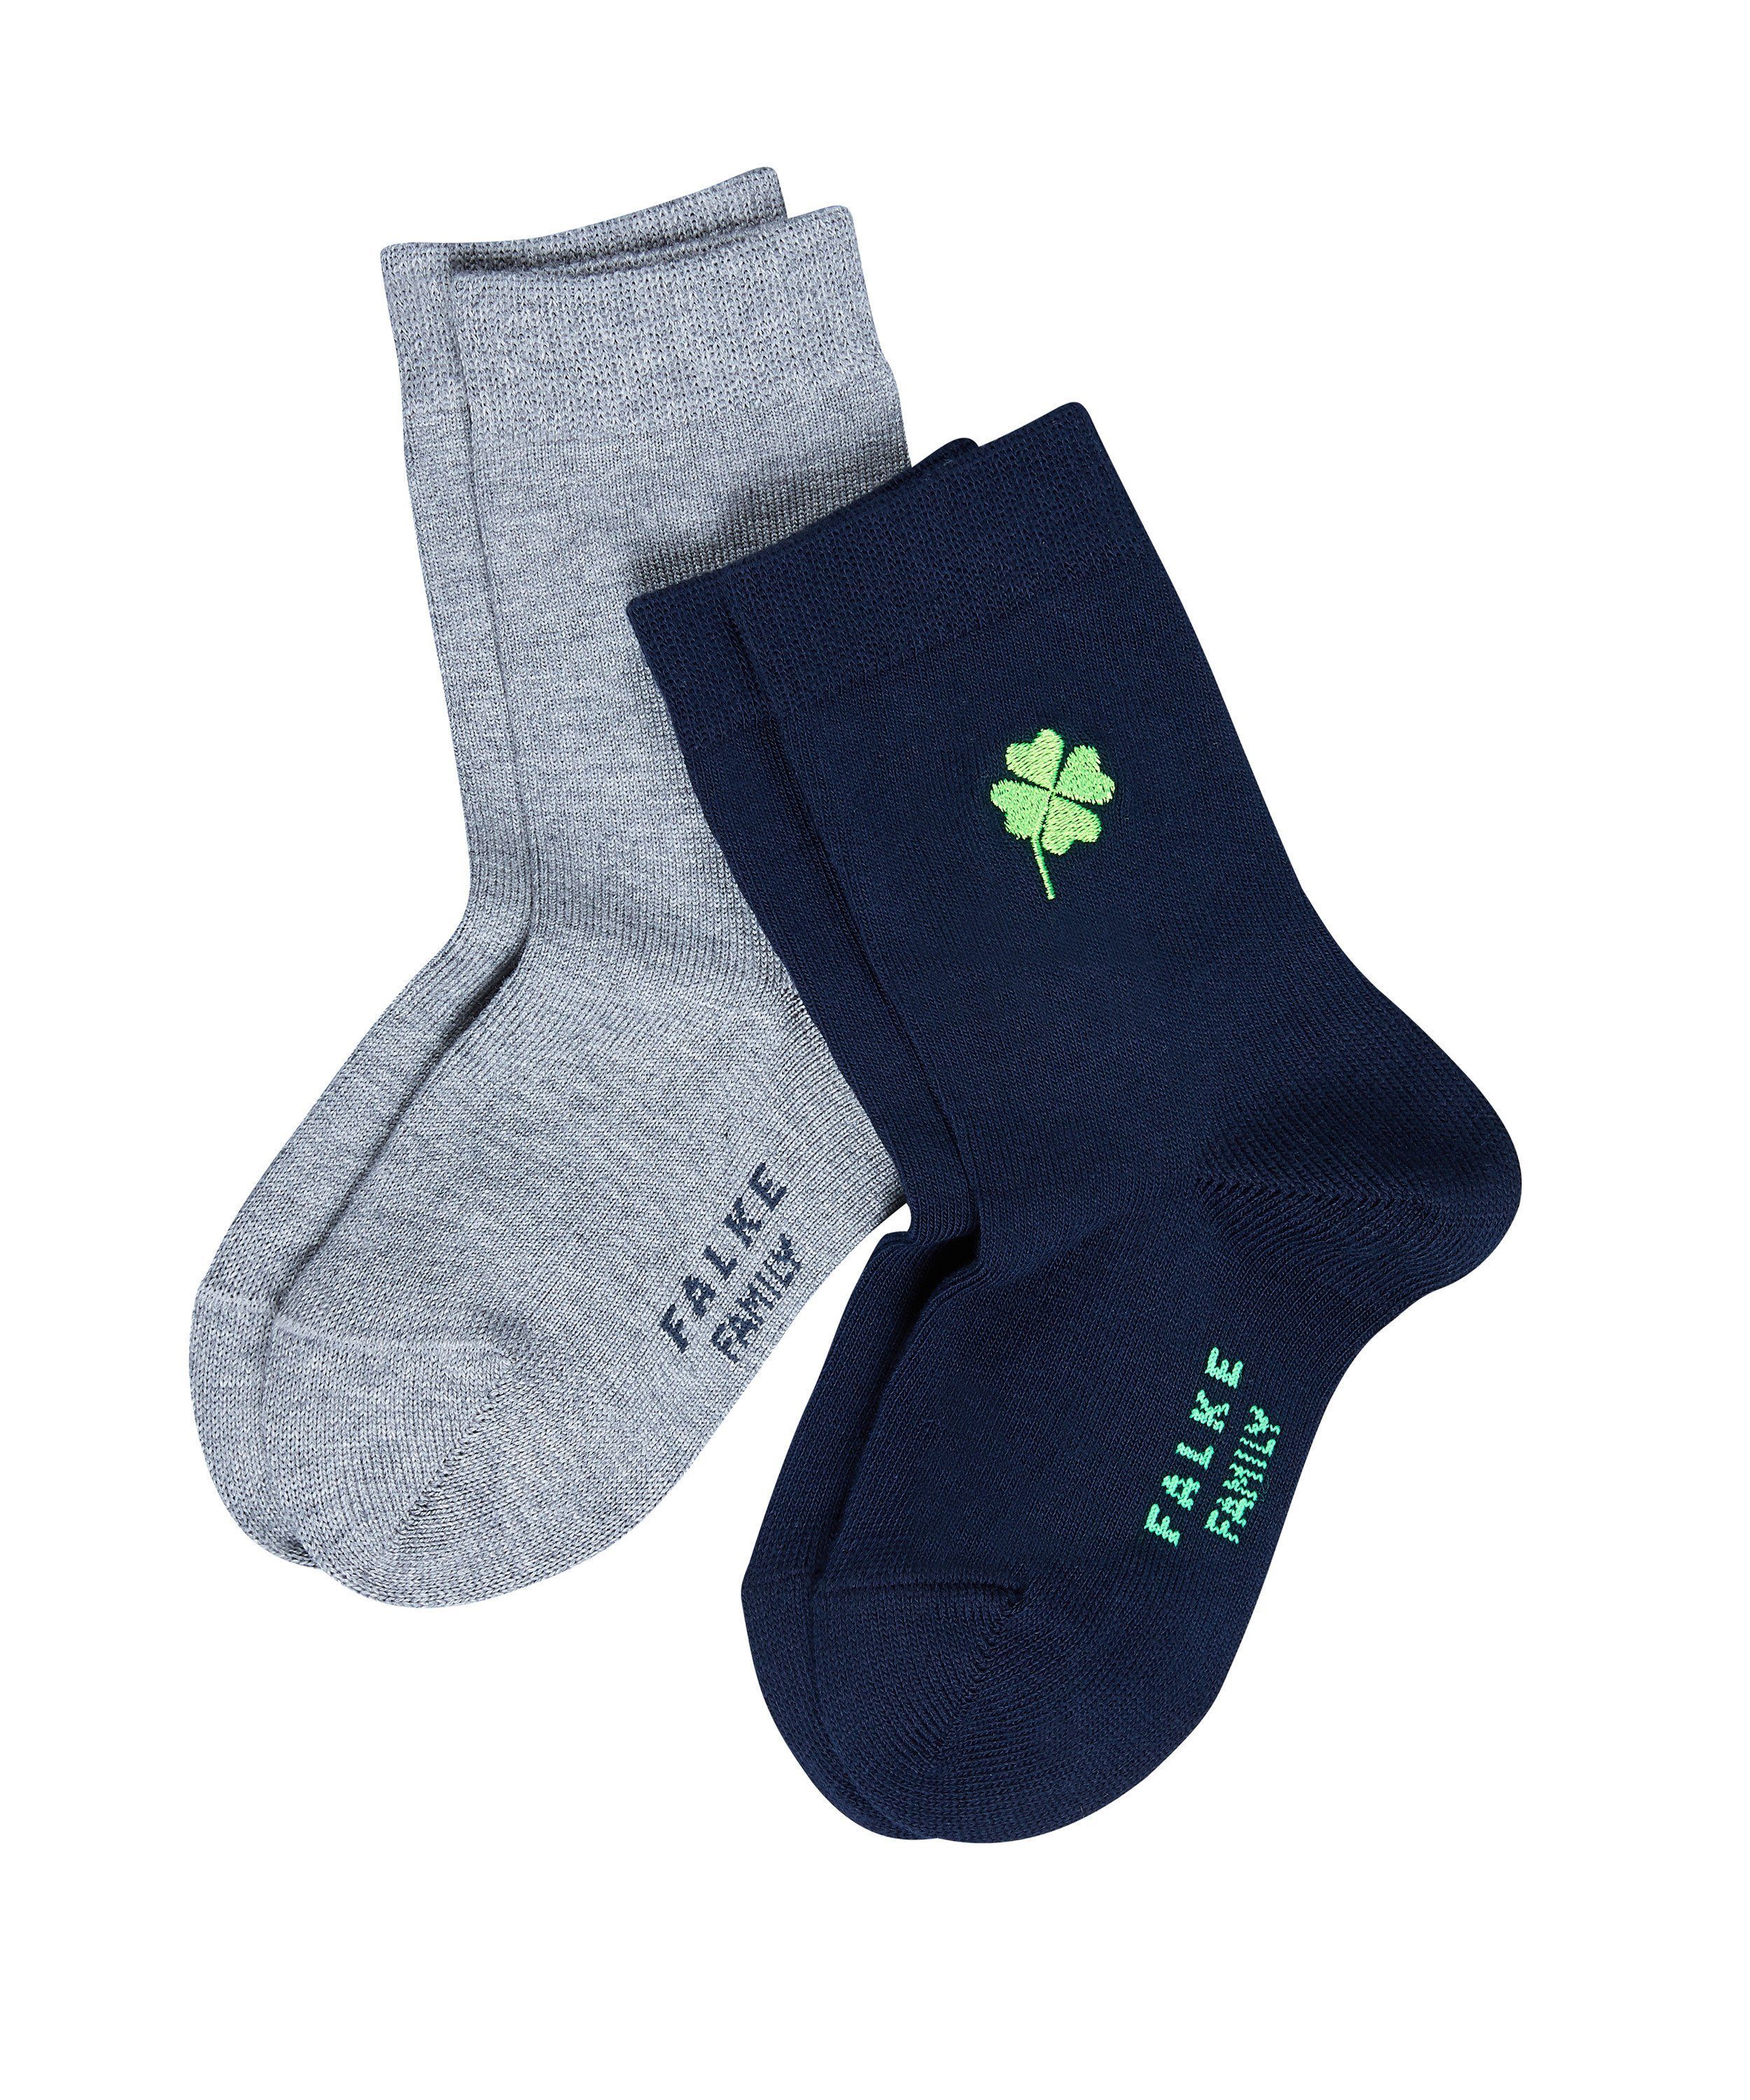 Set Lucky FALKE Socken (2-Paar) (0020) sortiment